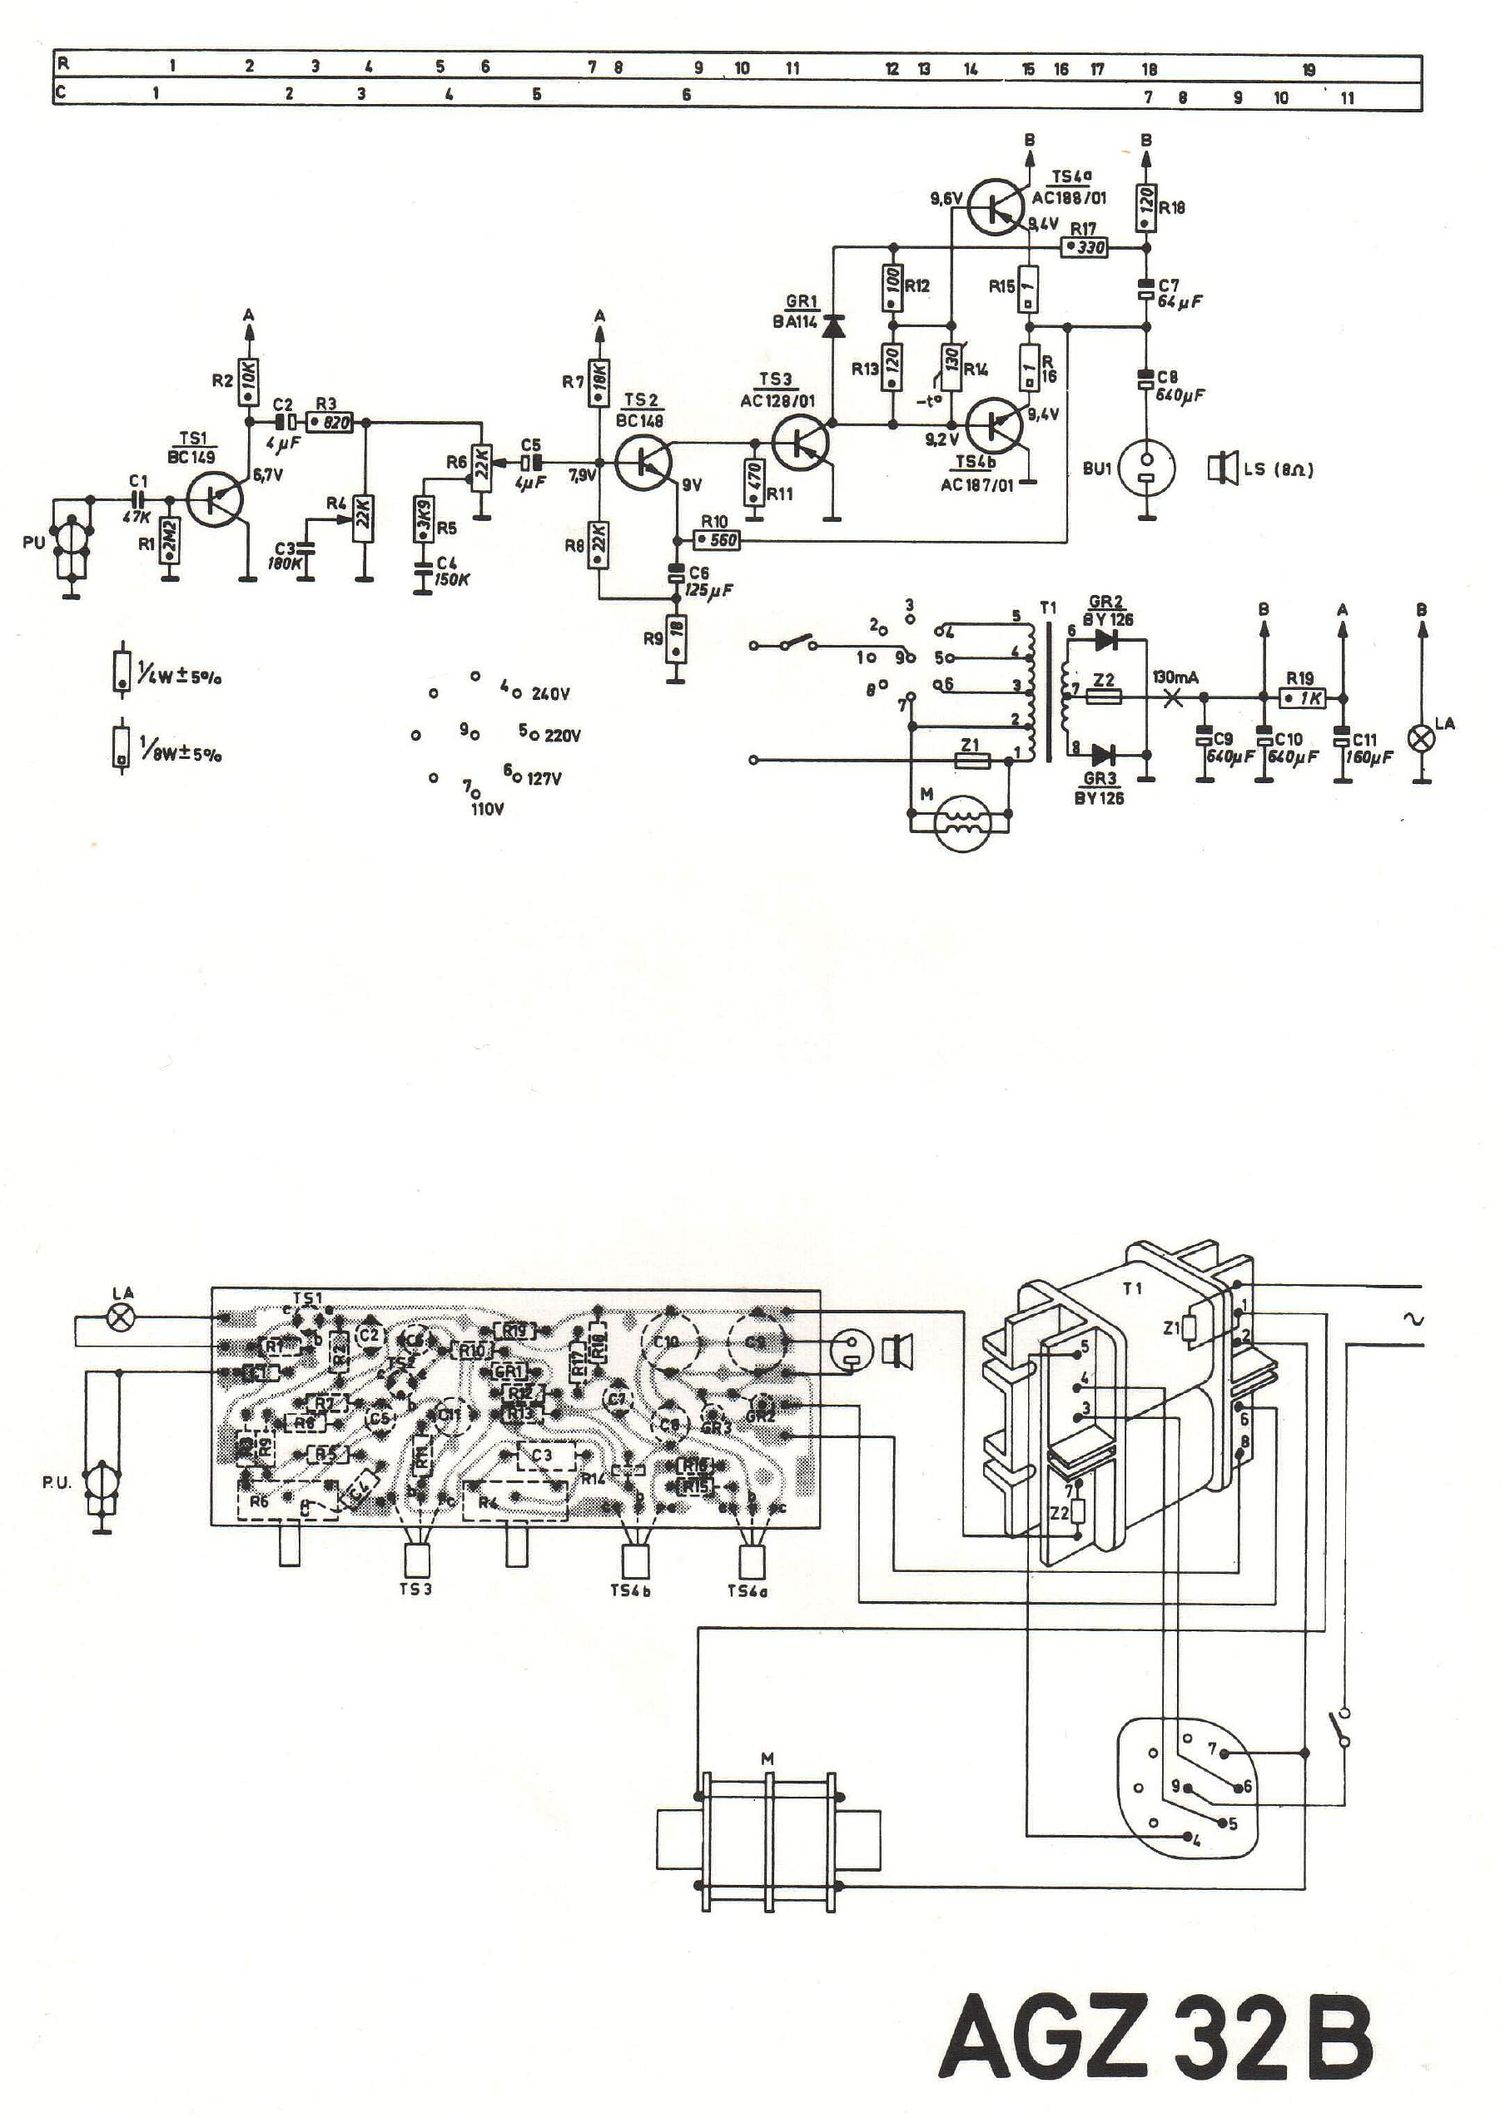 philips agz 32 b schematic